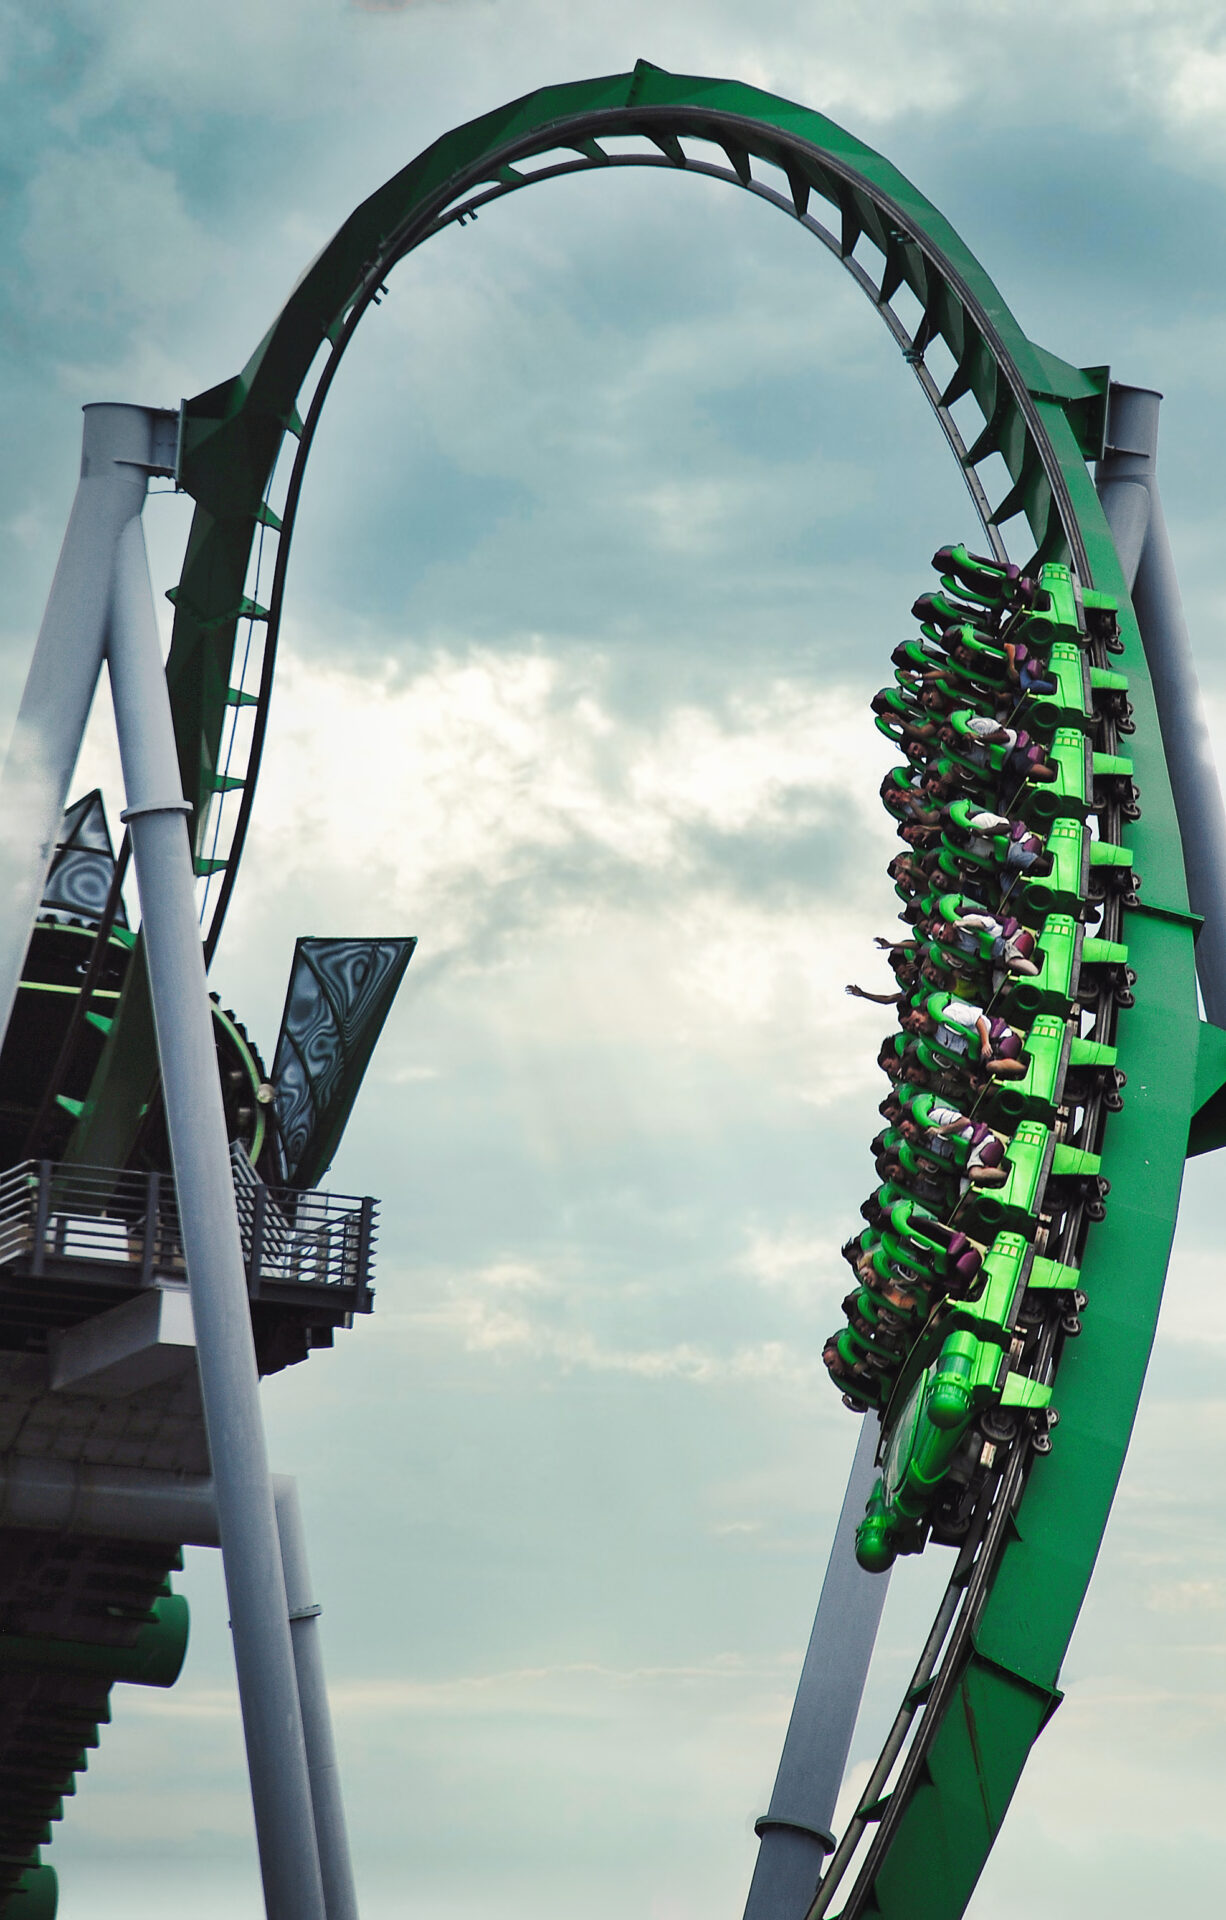 Universal Studios Islands of Adventure incredible Hulk Coaster Rollercoaster